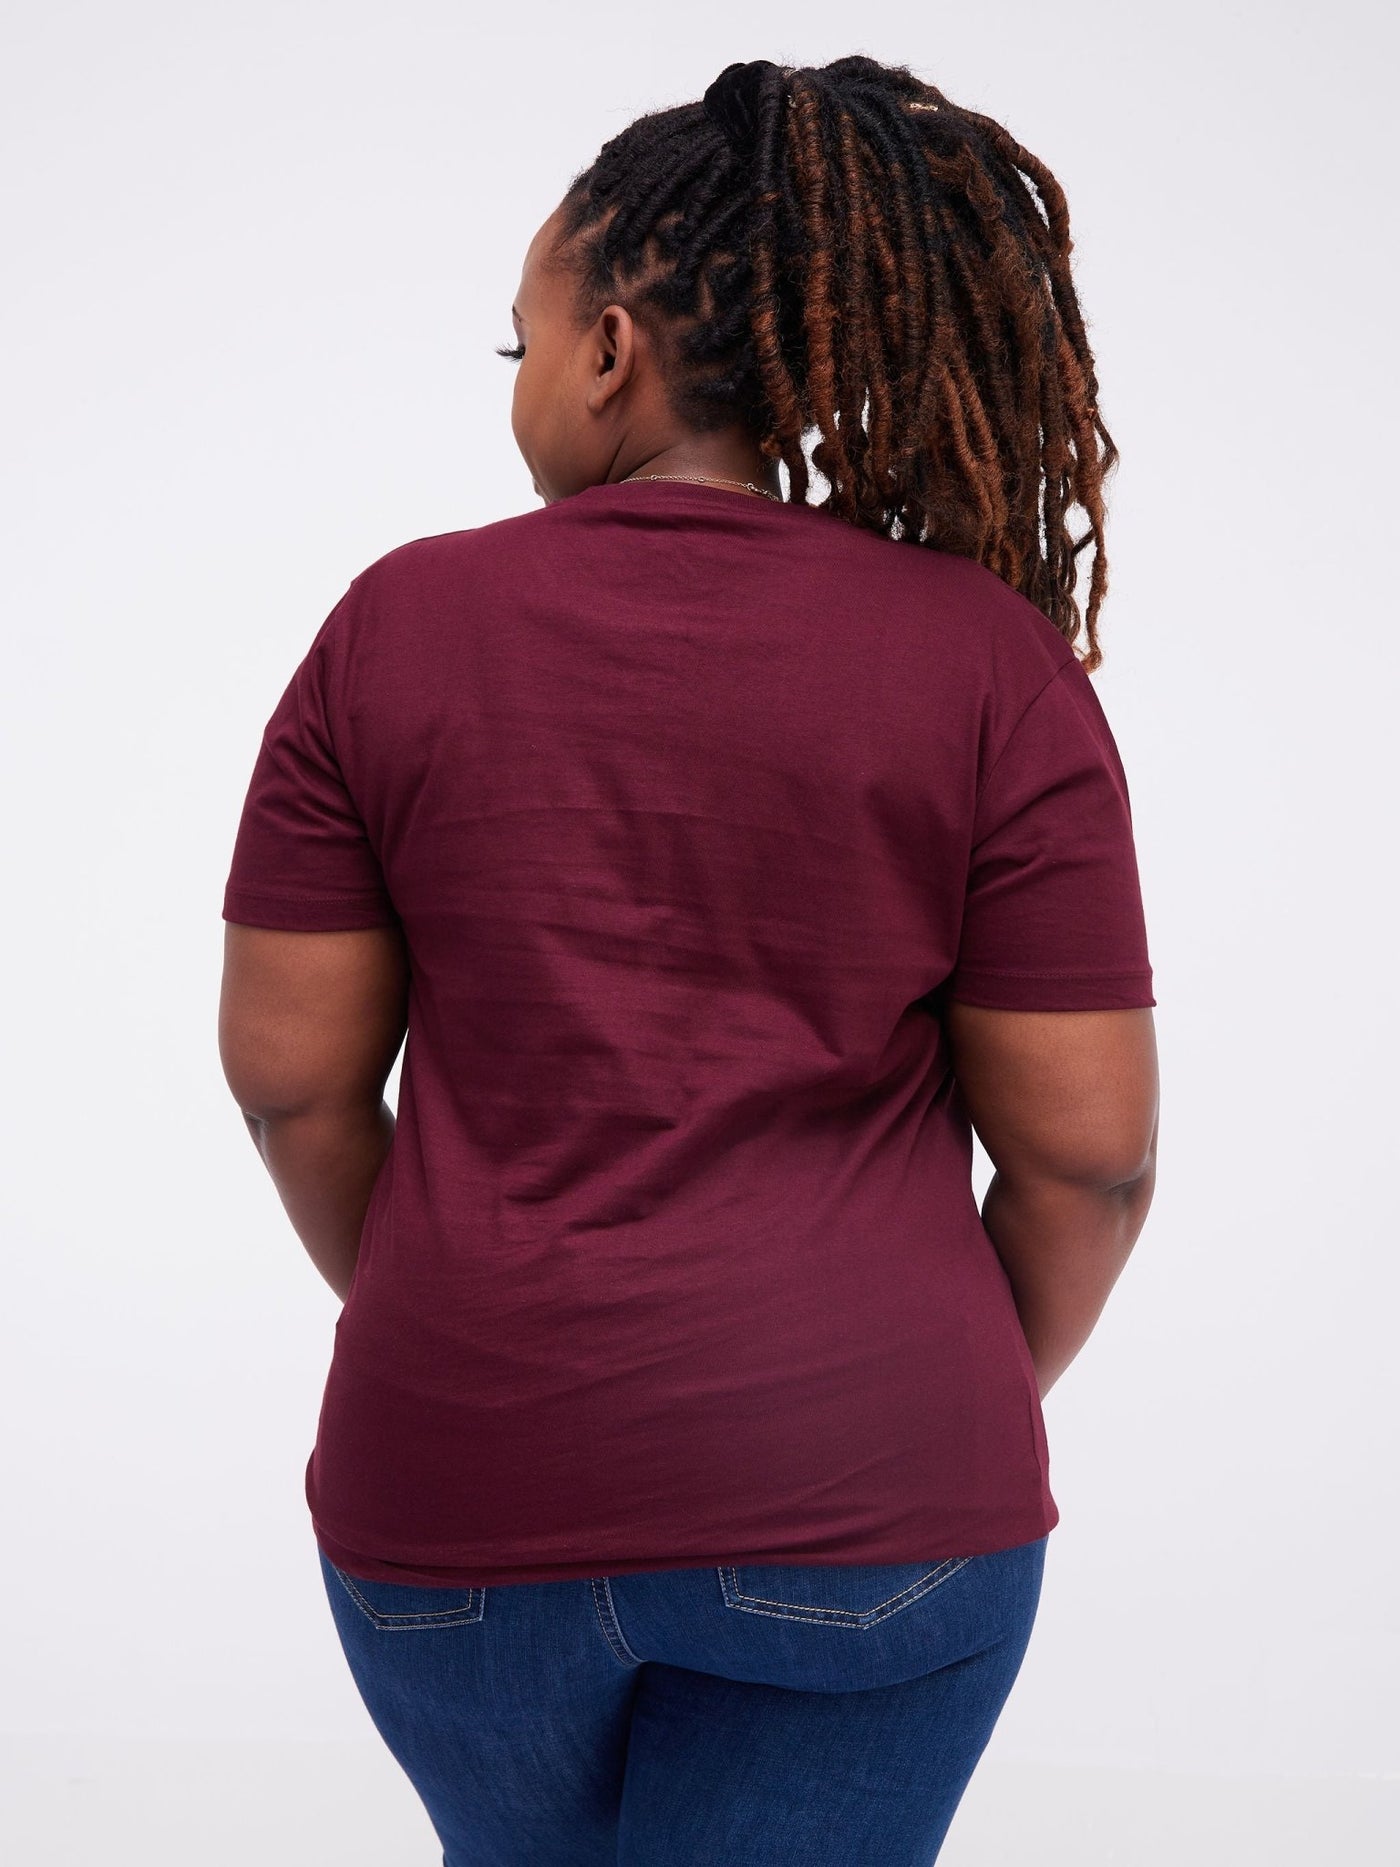 King's Collection Unisex Round Neck T-shirt - Maroon - Shop Zetu Kenya